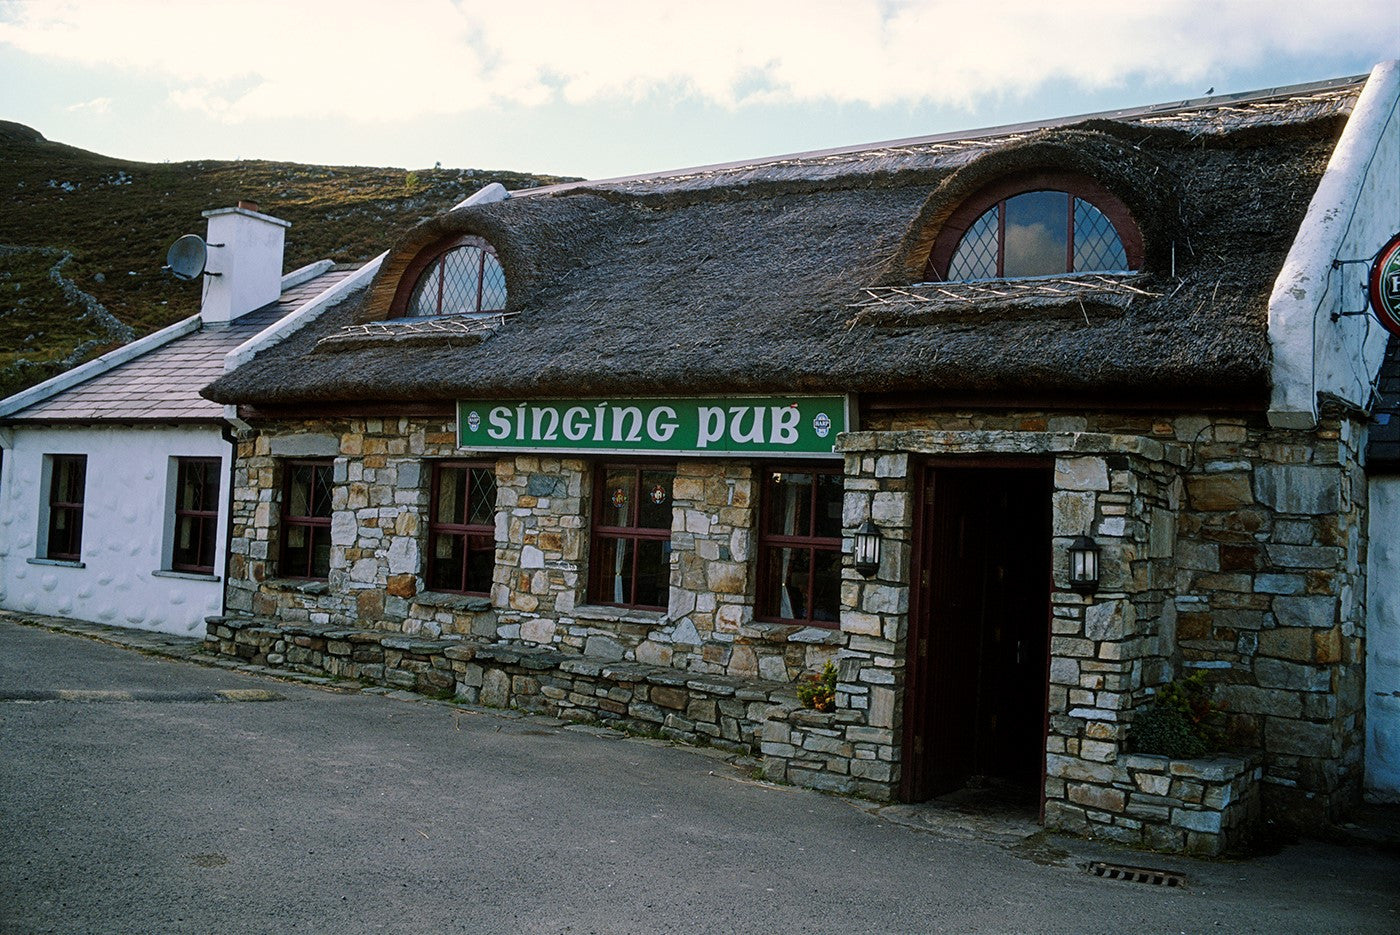 Nan Goldin, The Singing Pub (2002)